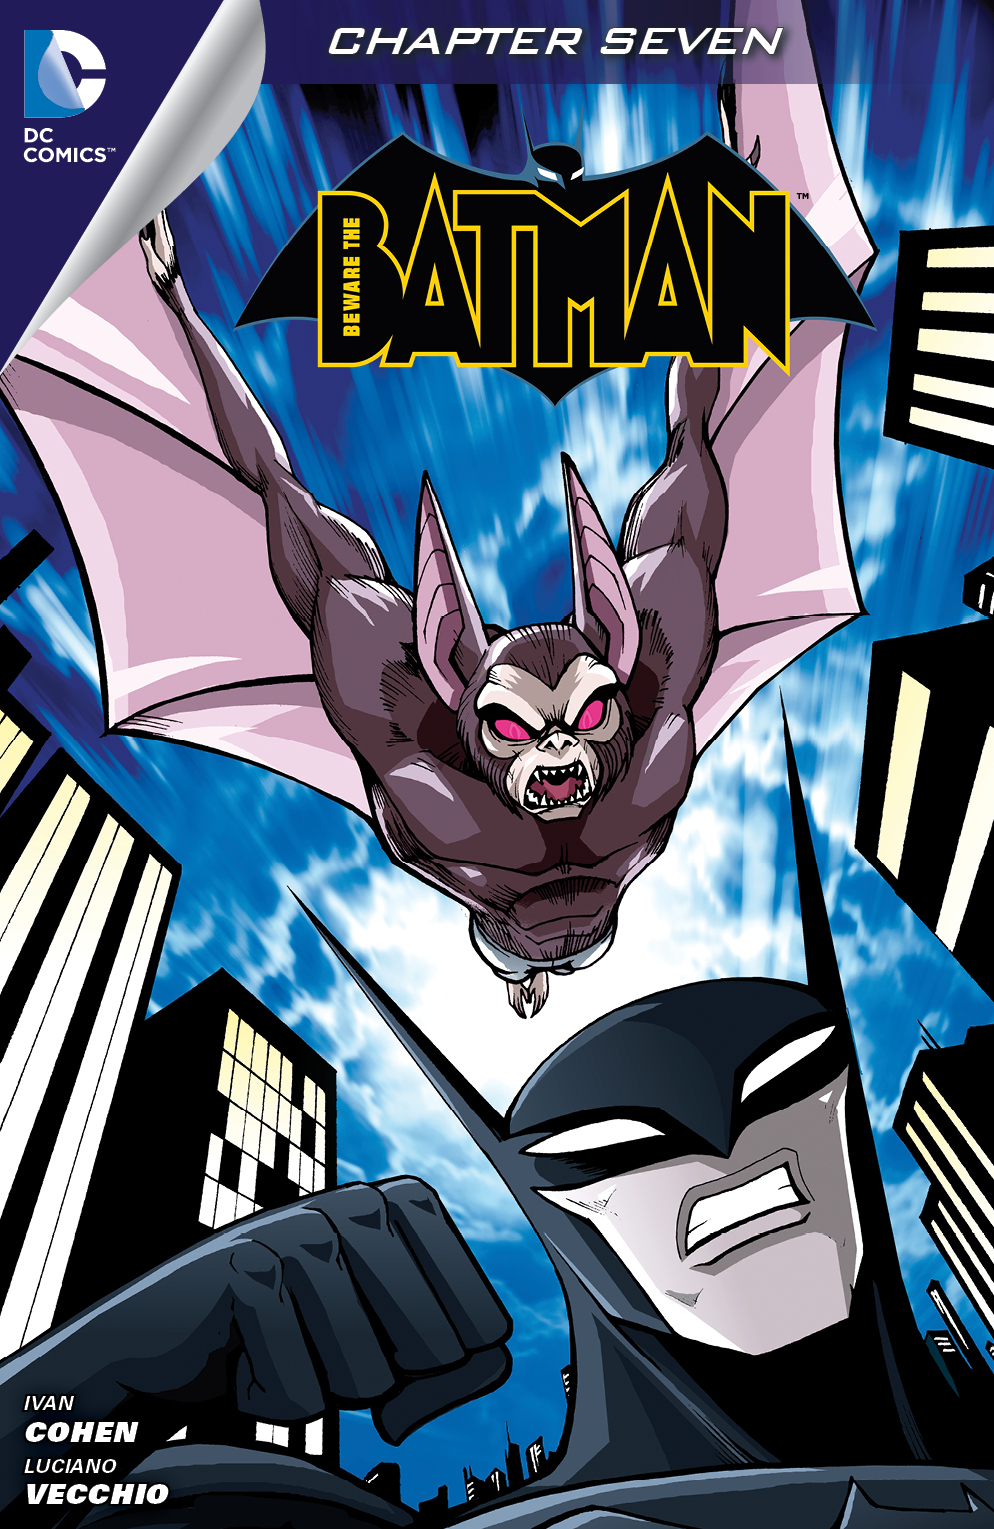 Beware The Batman #7 preview images